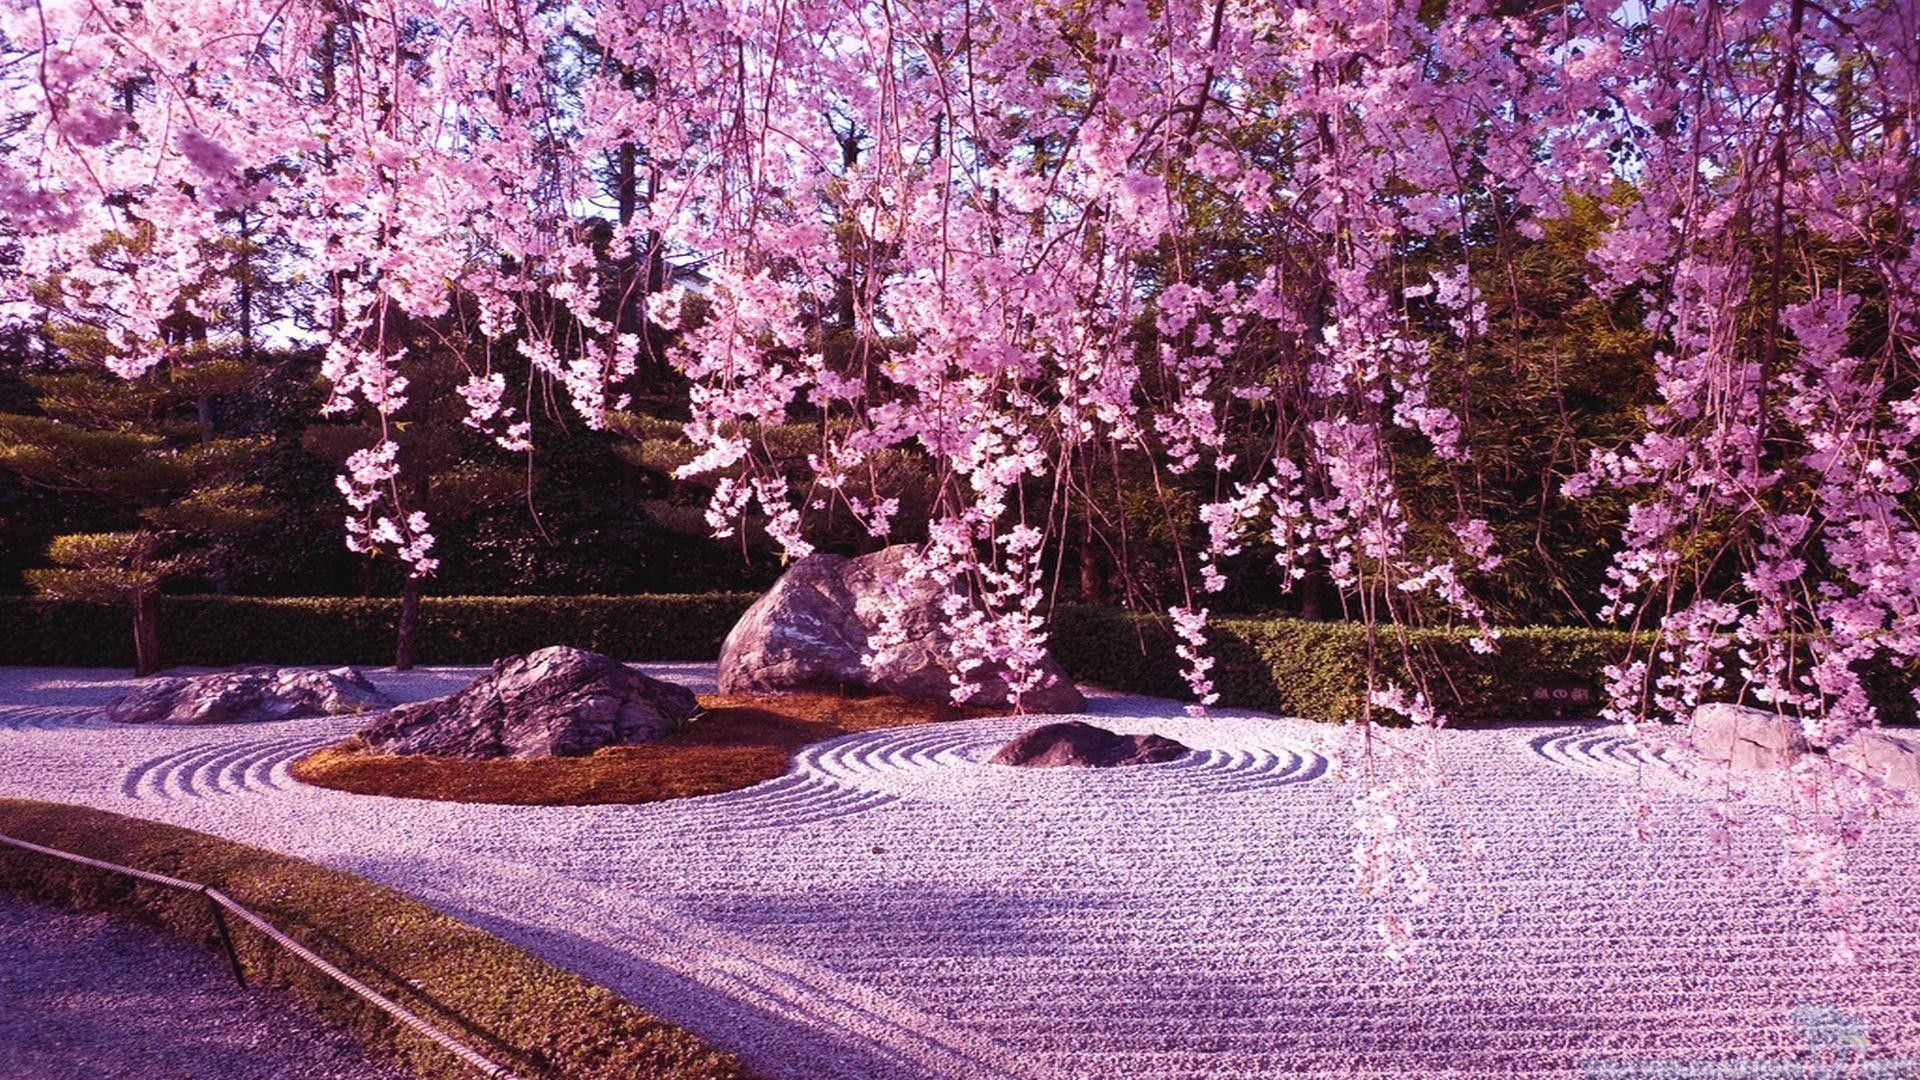 Wallpaper For > Cherry Blossom Tree Anime Wallpaper. Cherry blossom wallpaper, Anime cherry blossom, Blossom garden